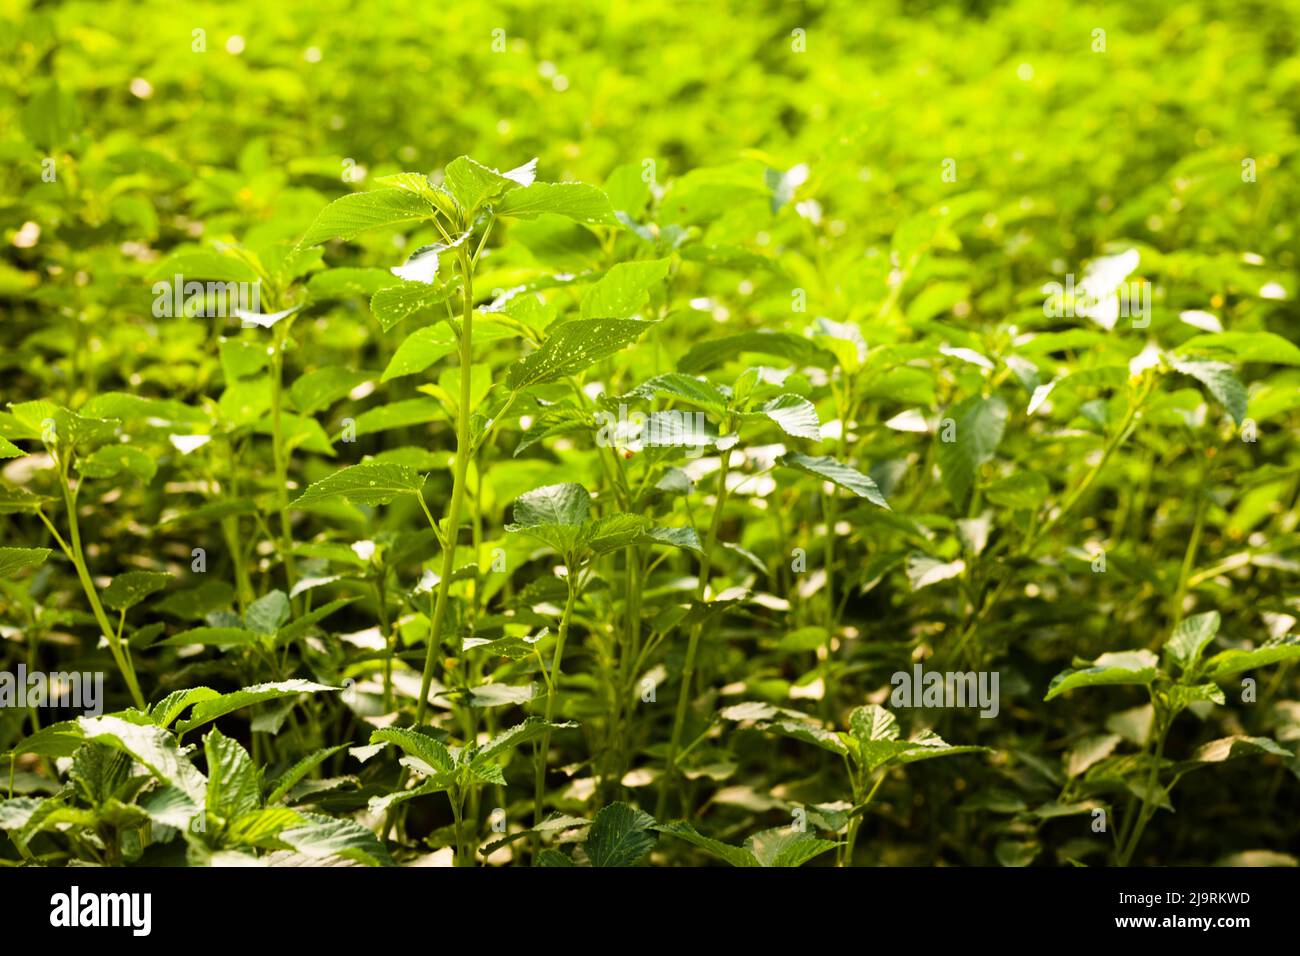 White jute plantation in greenhouse Stock Photo